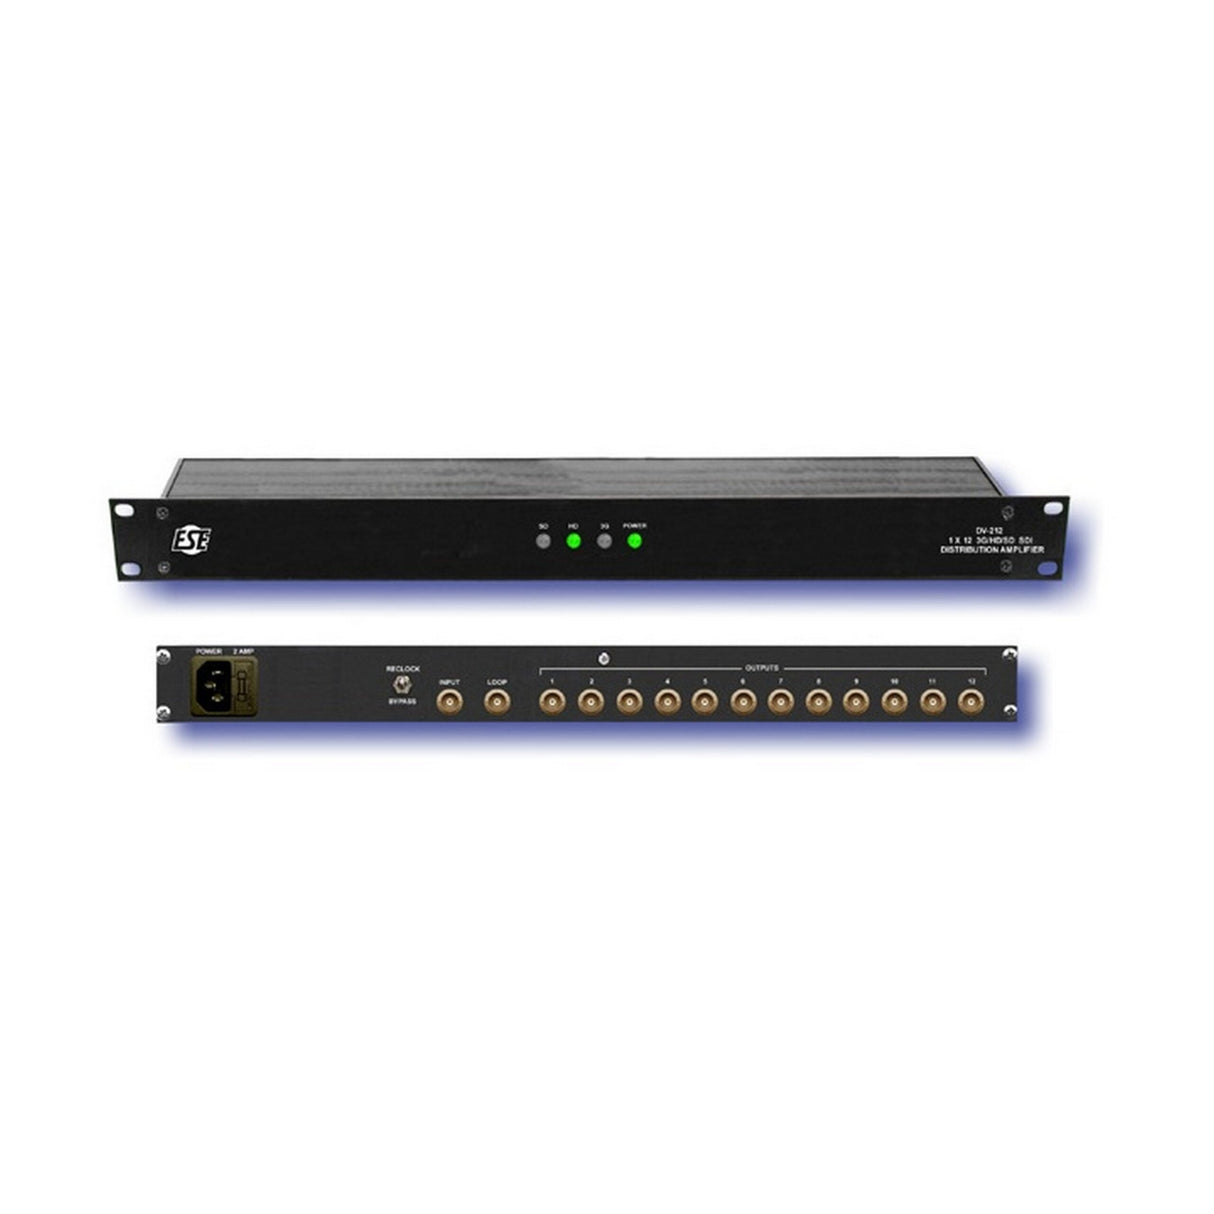 ESE DV-212 1 x 12 3G/HD/SD SDI Digital Video Distribution Amplifier